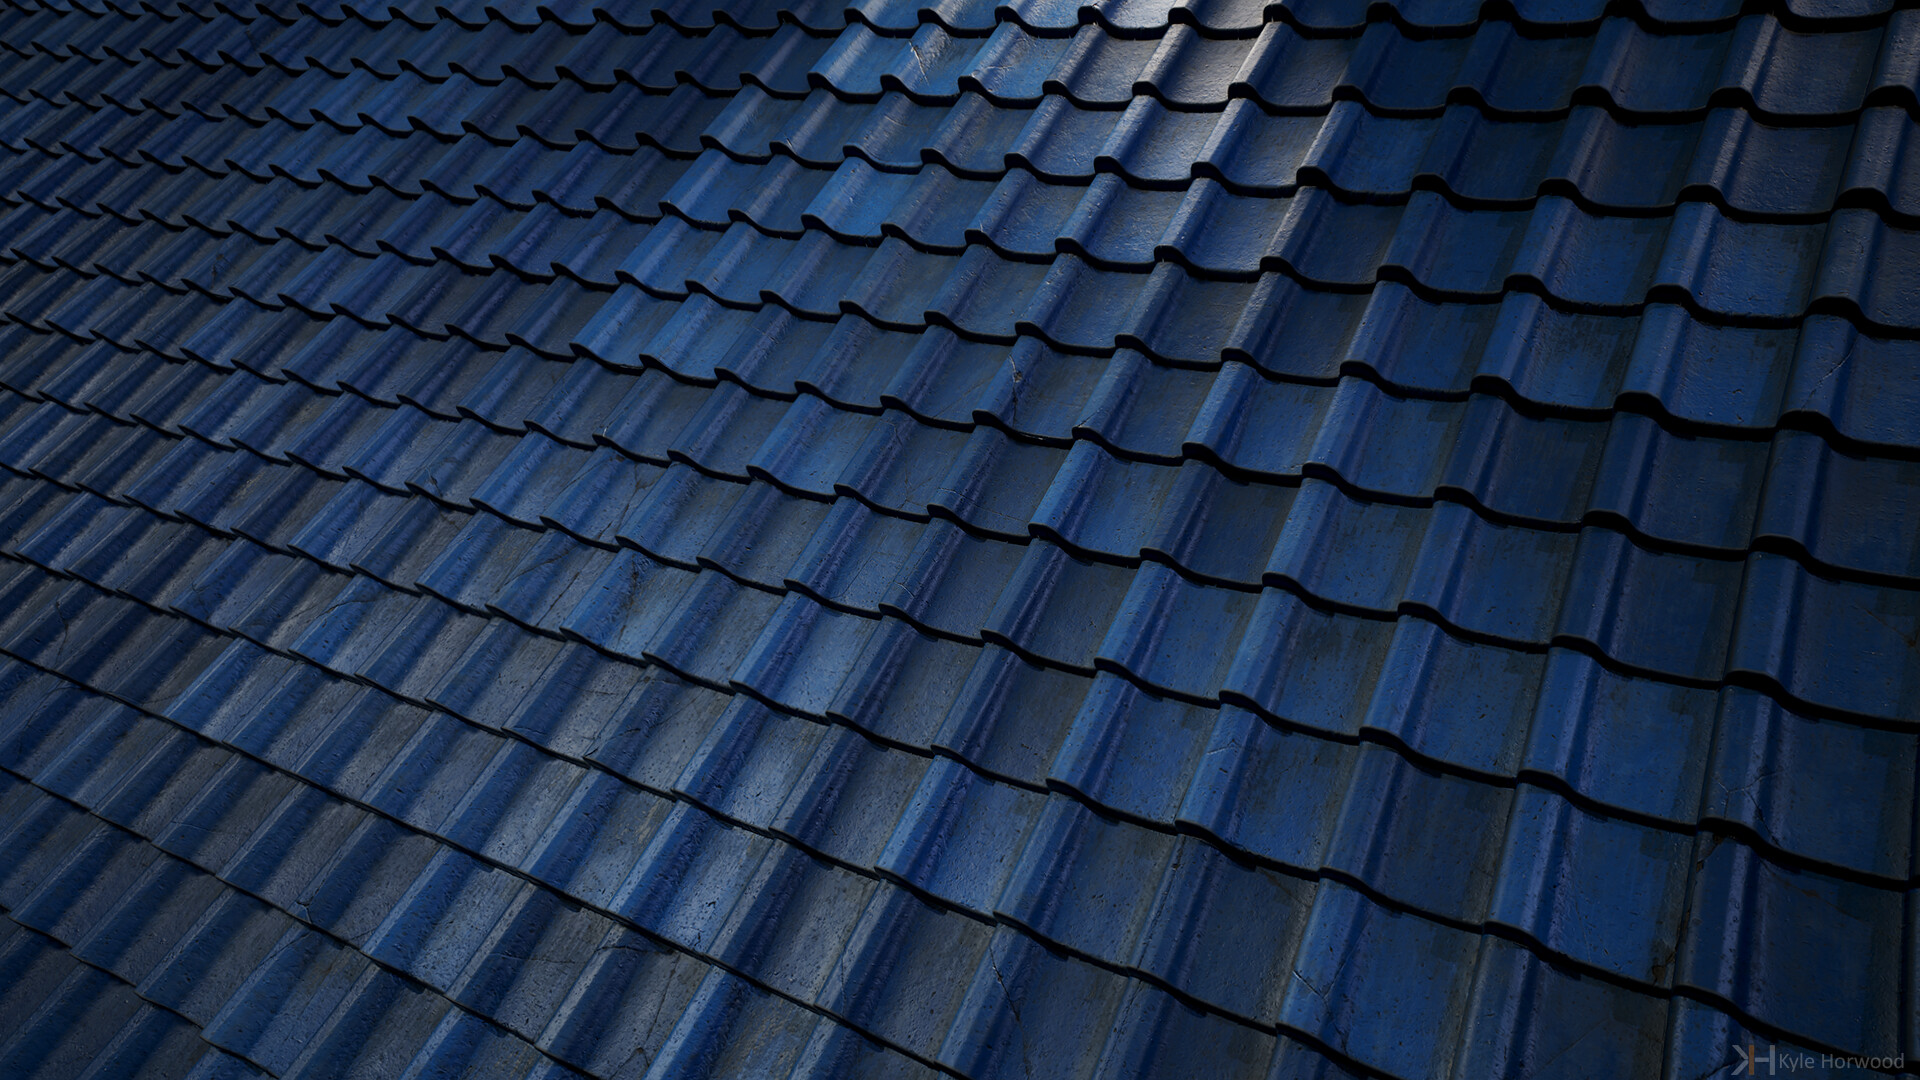 Kyle Horwood - Substance Source: Japanese Roof Tiles